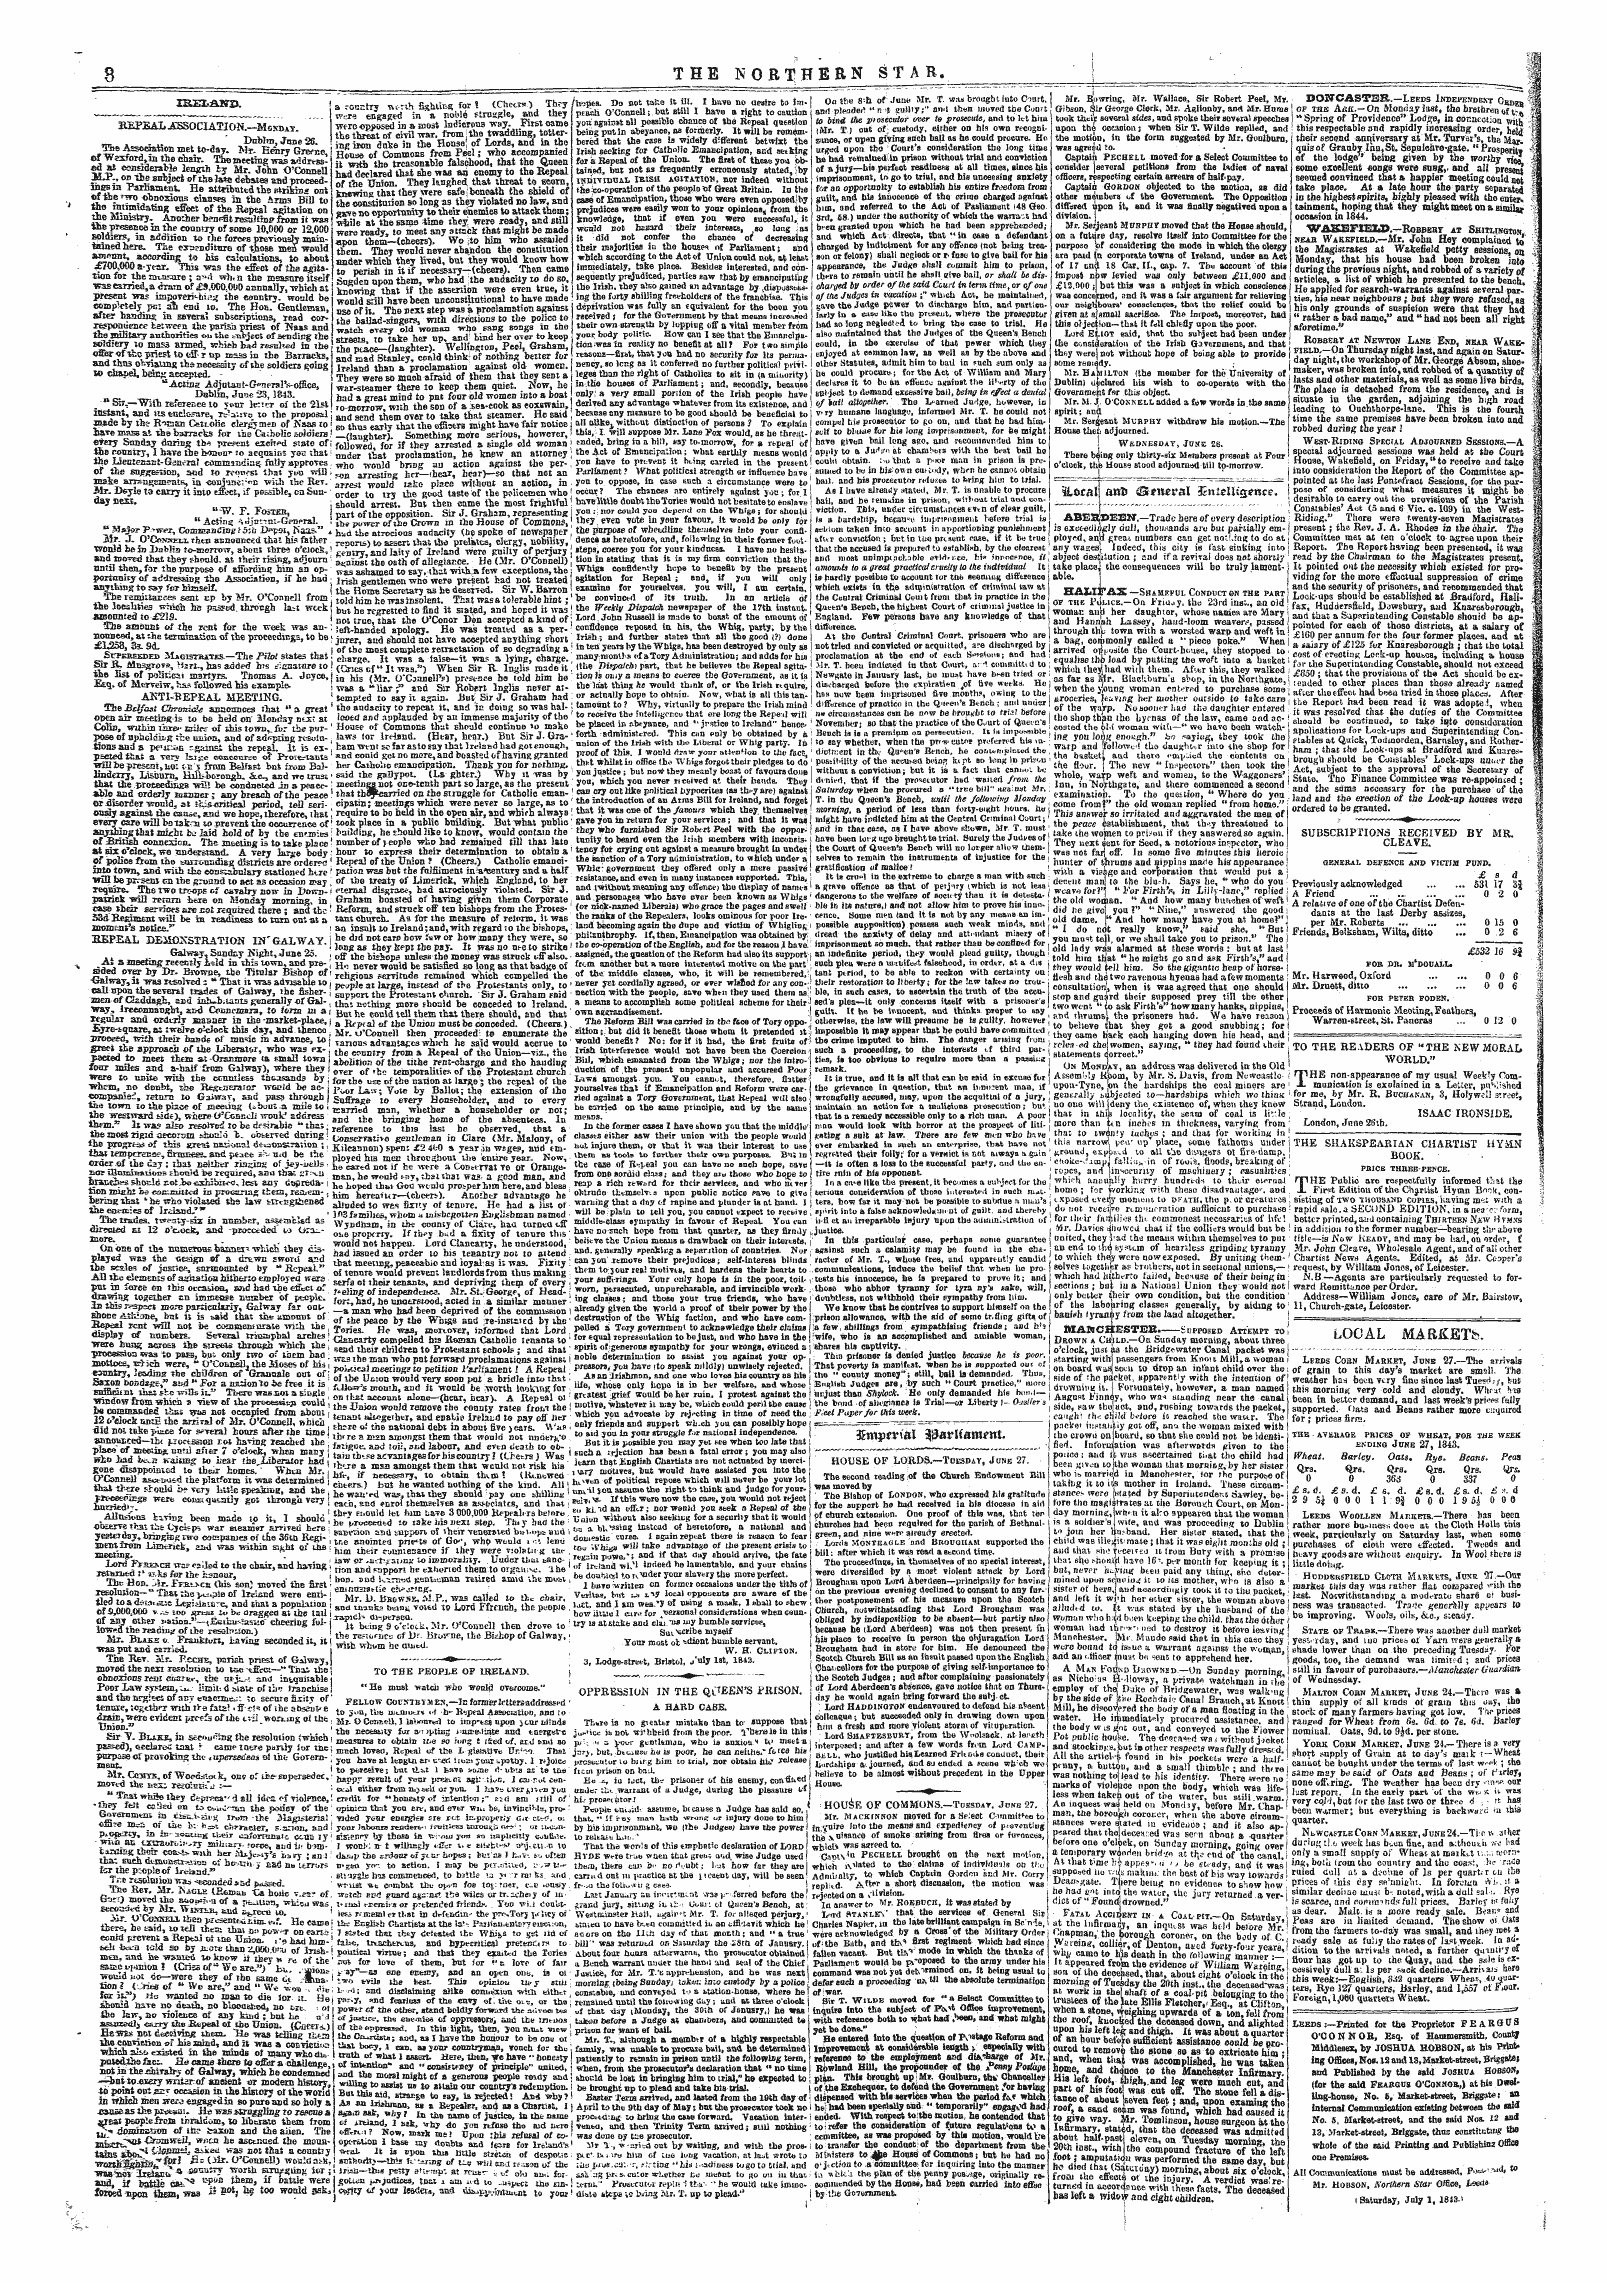 Northern Star (1837-1852): jS F Y, 4th edition: 8